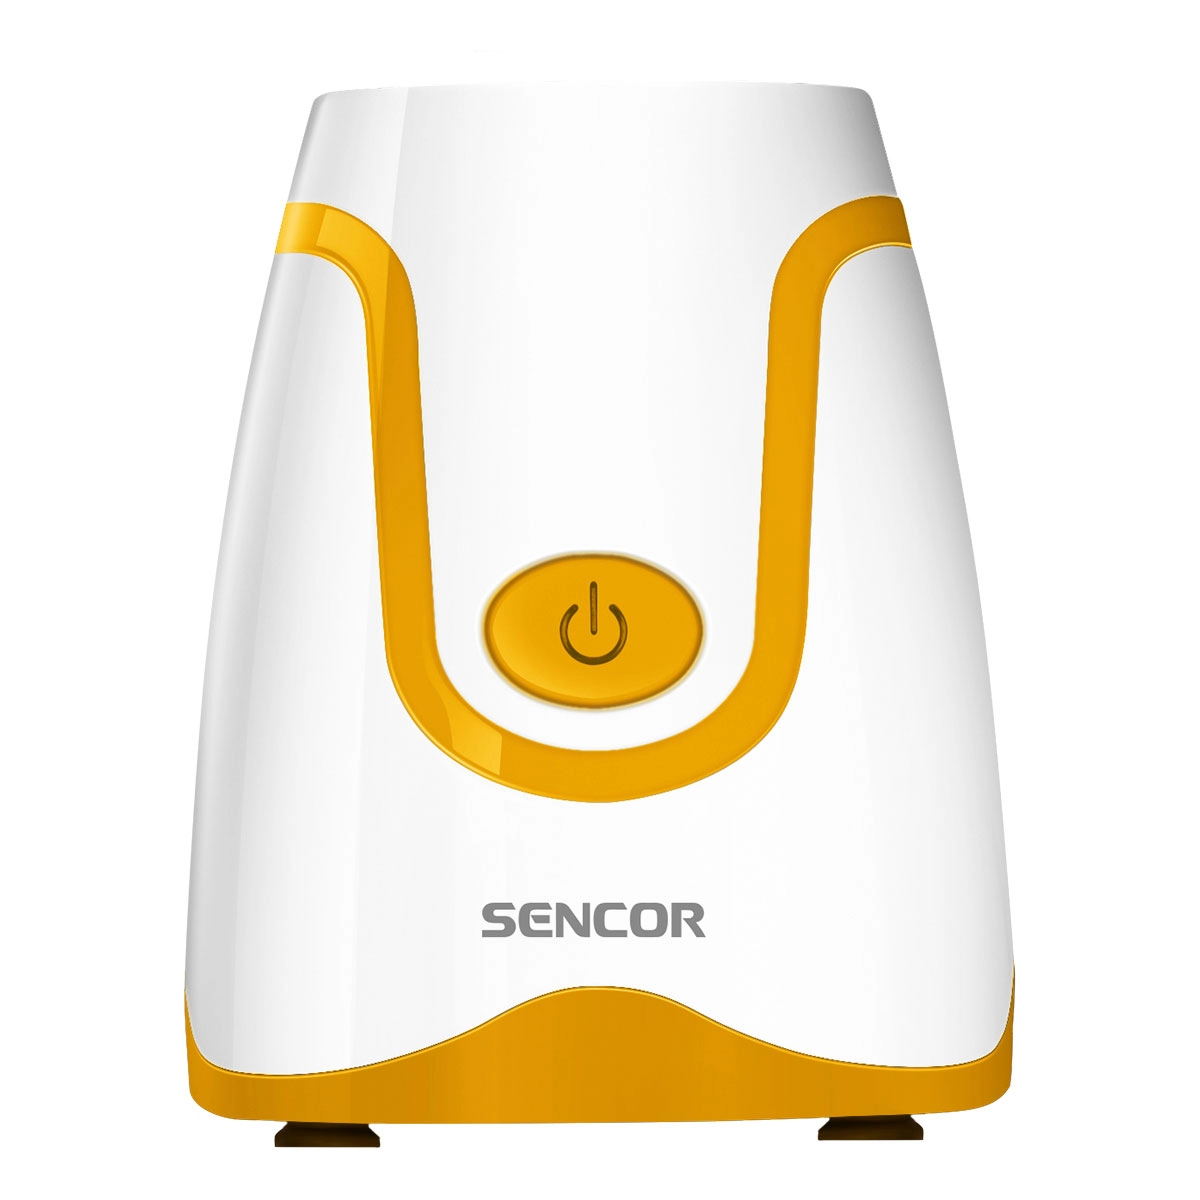 Blender pentru smoothie Sencor SBL 2213OR, 5 W, Alb, orange